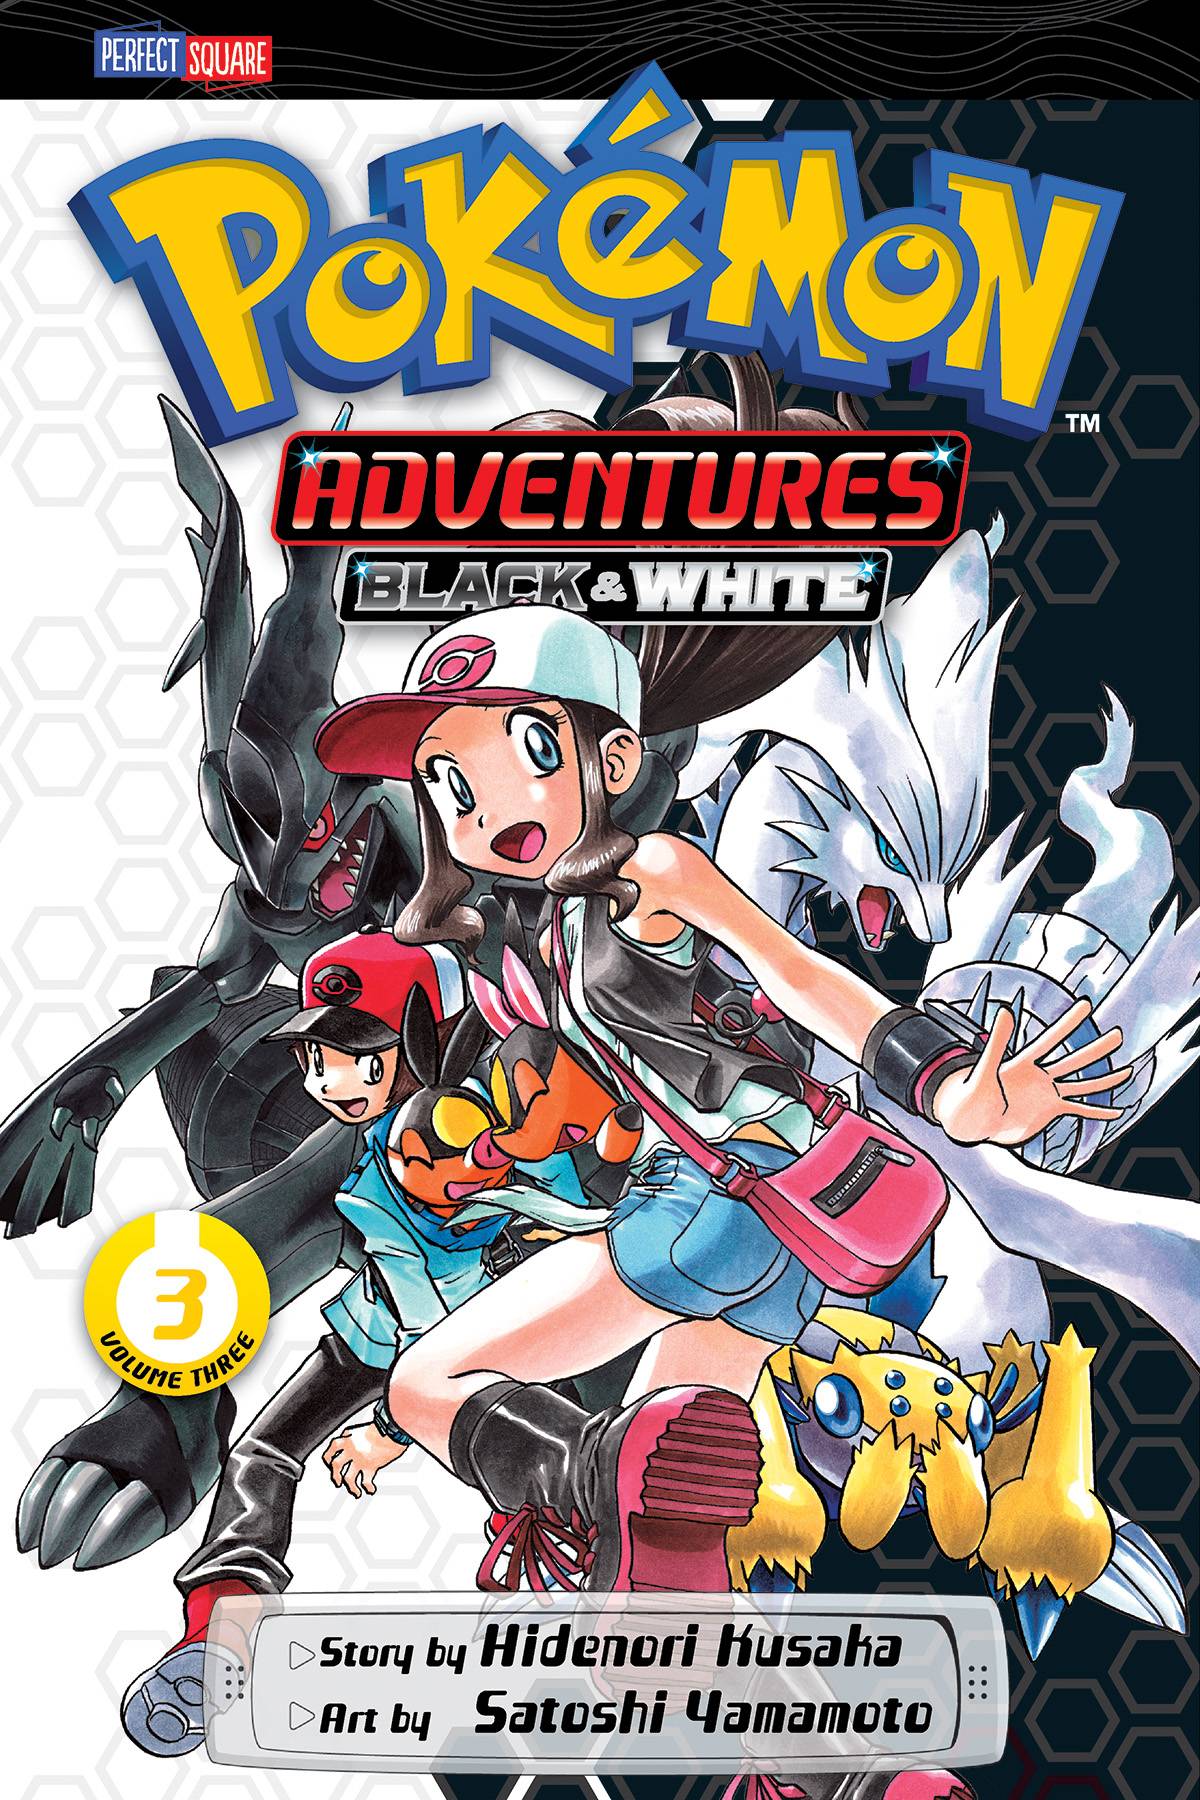 Pokémon Adventure Black & White Manga Volume 3